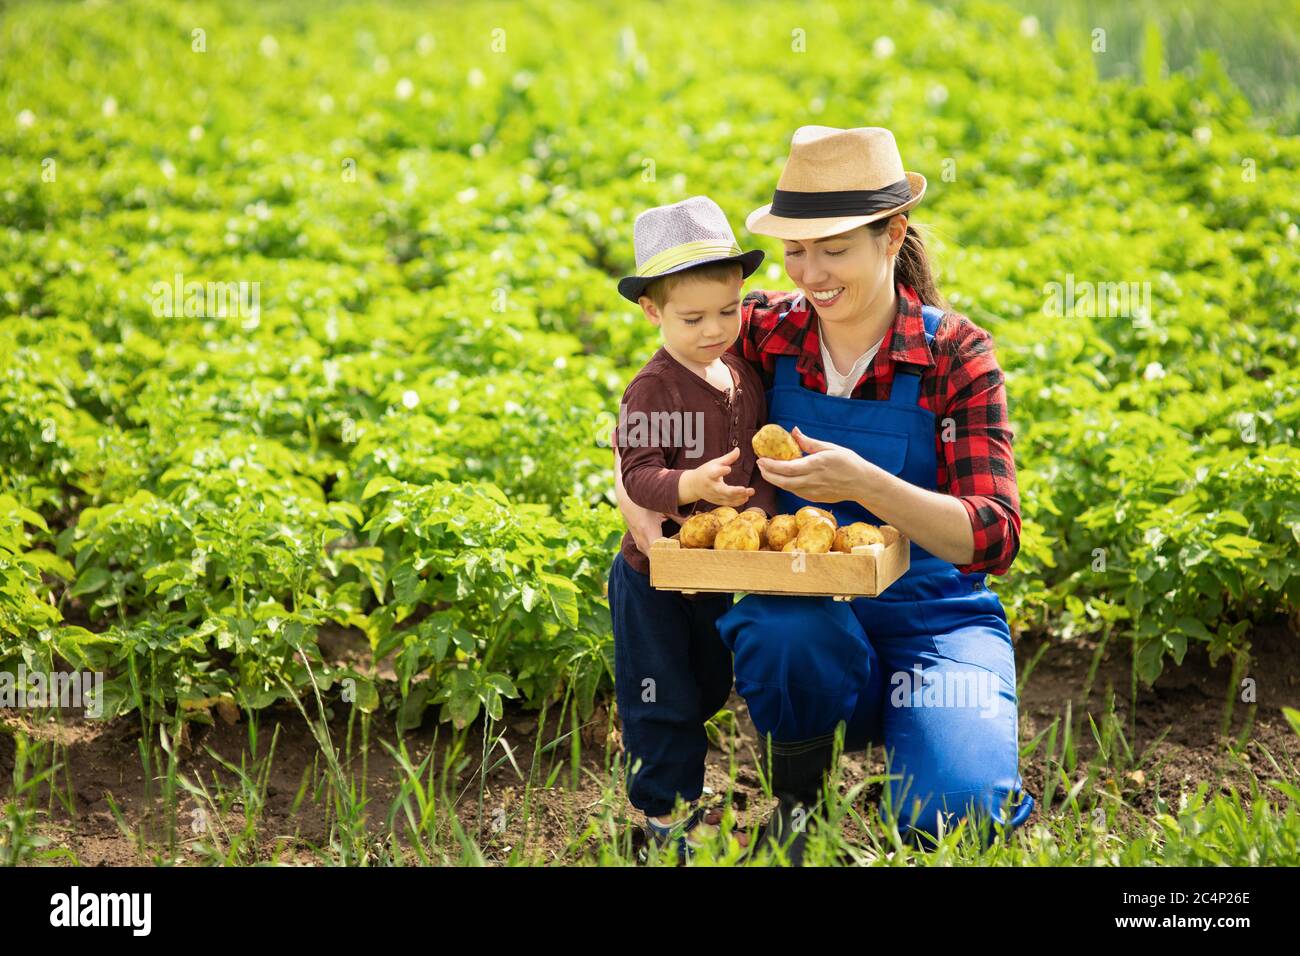 woman gardener with son harvesting potatoes Stock Photo